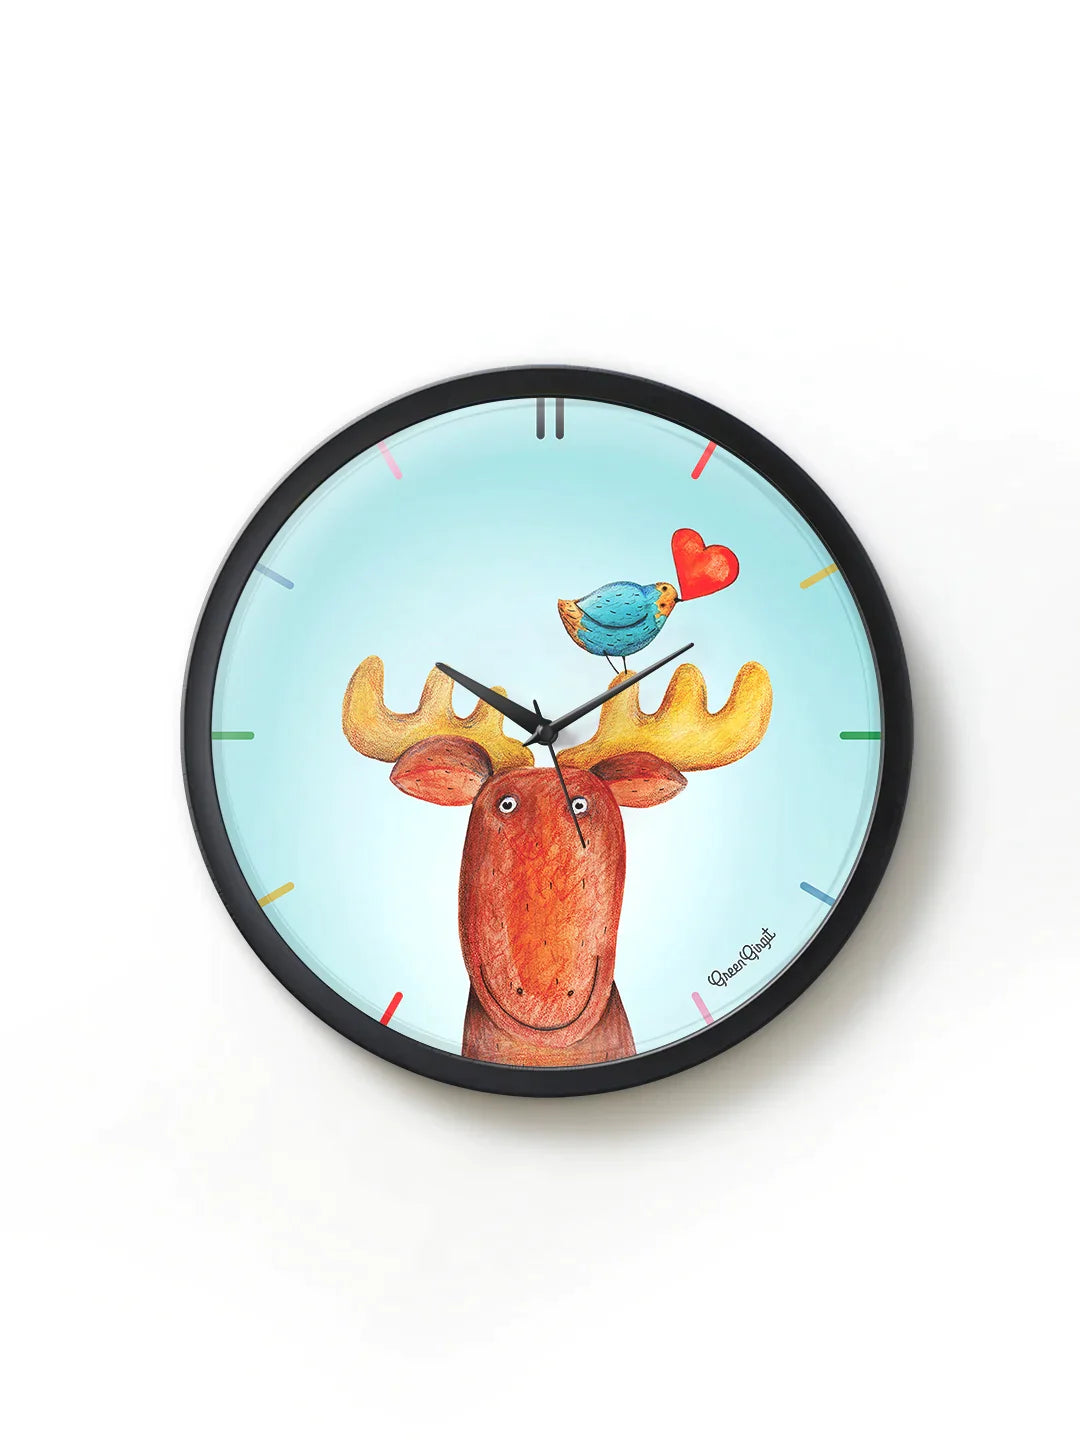 Arty reindeer Multicolor13.5 Inch Plastic Analog Wall Clock